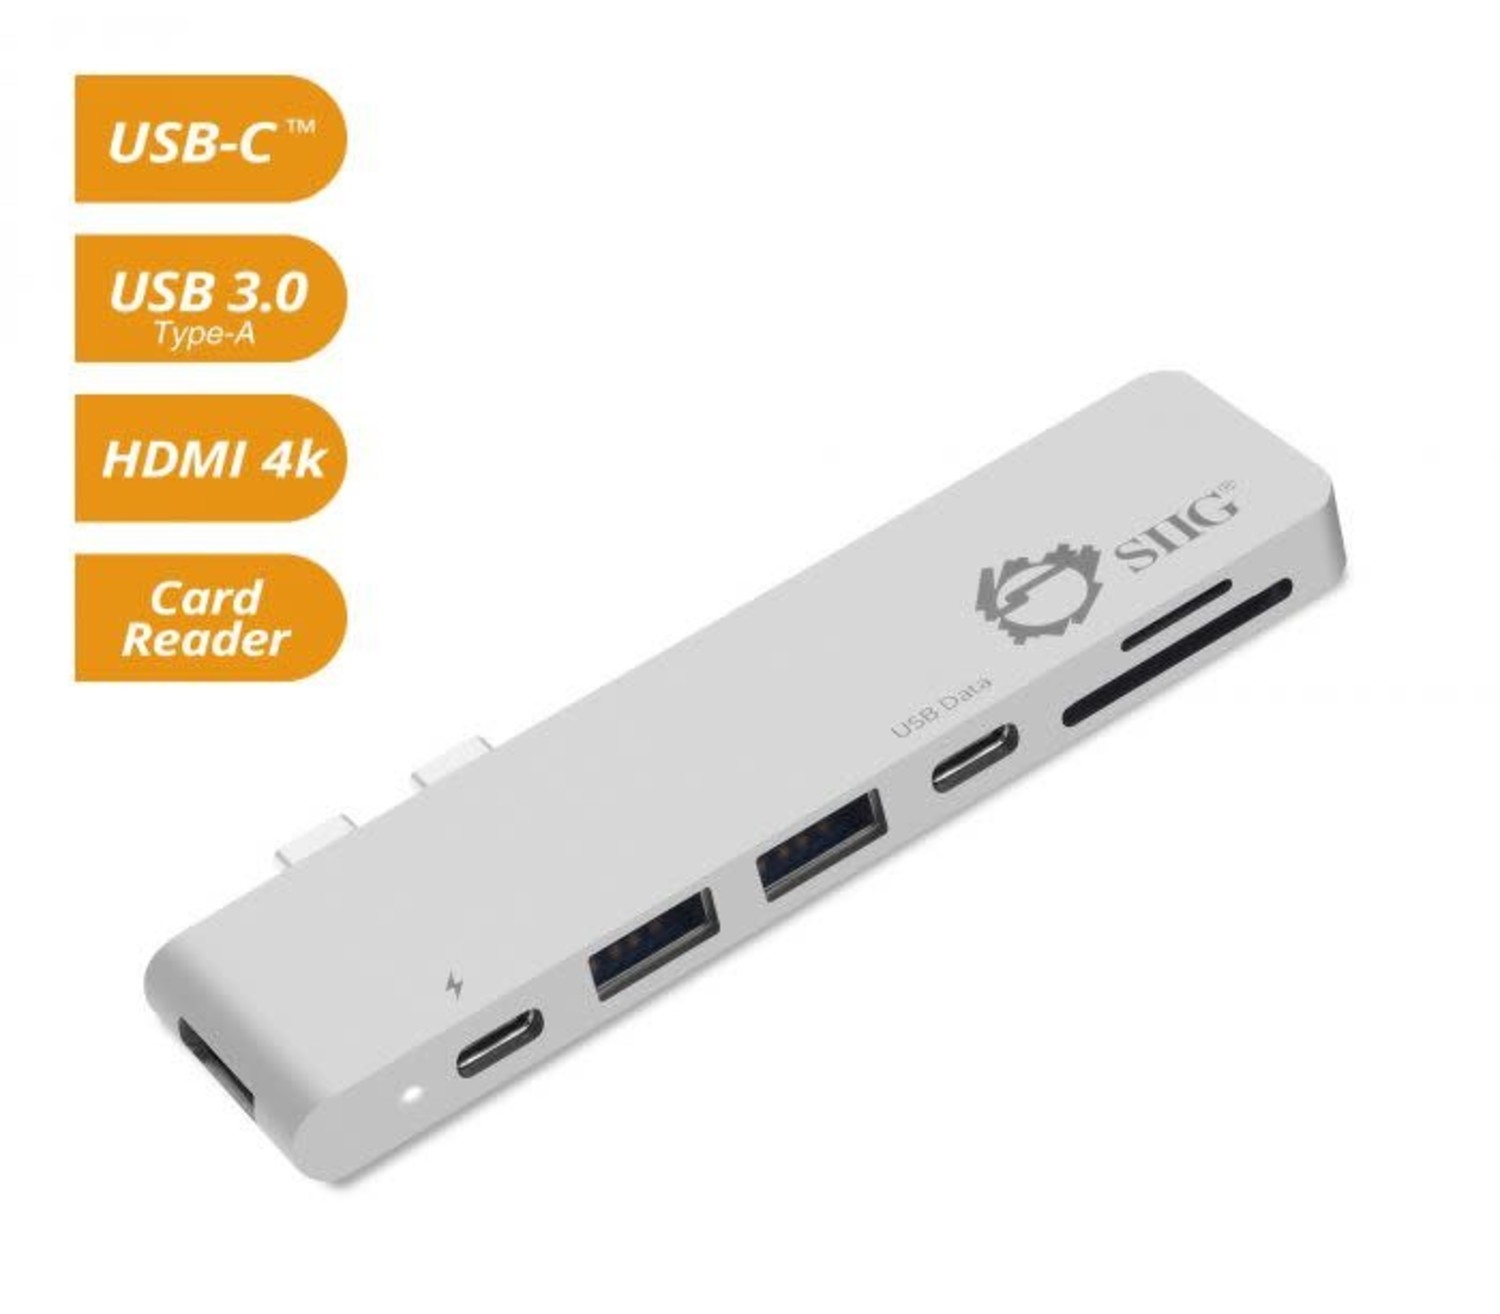 Thunderbolt 3 USB-C Hub HDMI with Card Reader & PD Adapter - kite+key, Rutgers Tech Store